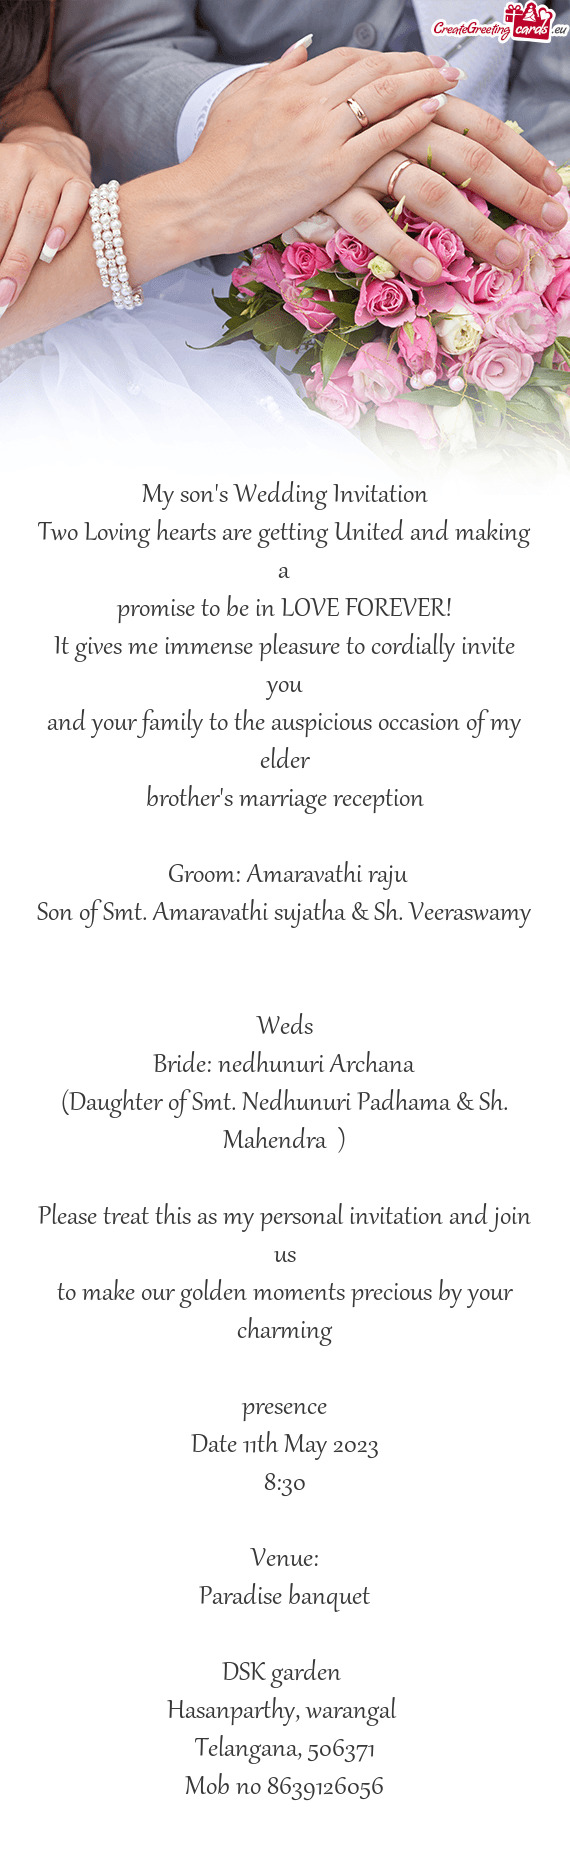 Groom: Amaravathi raju